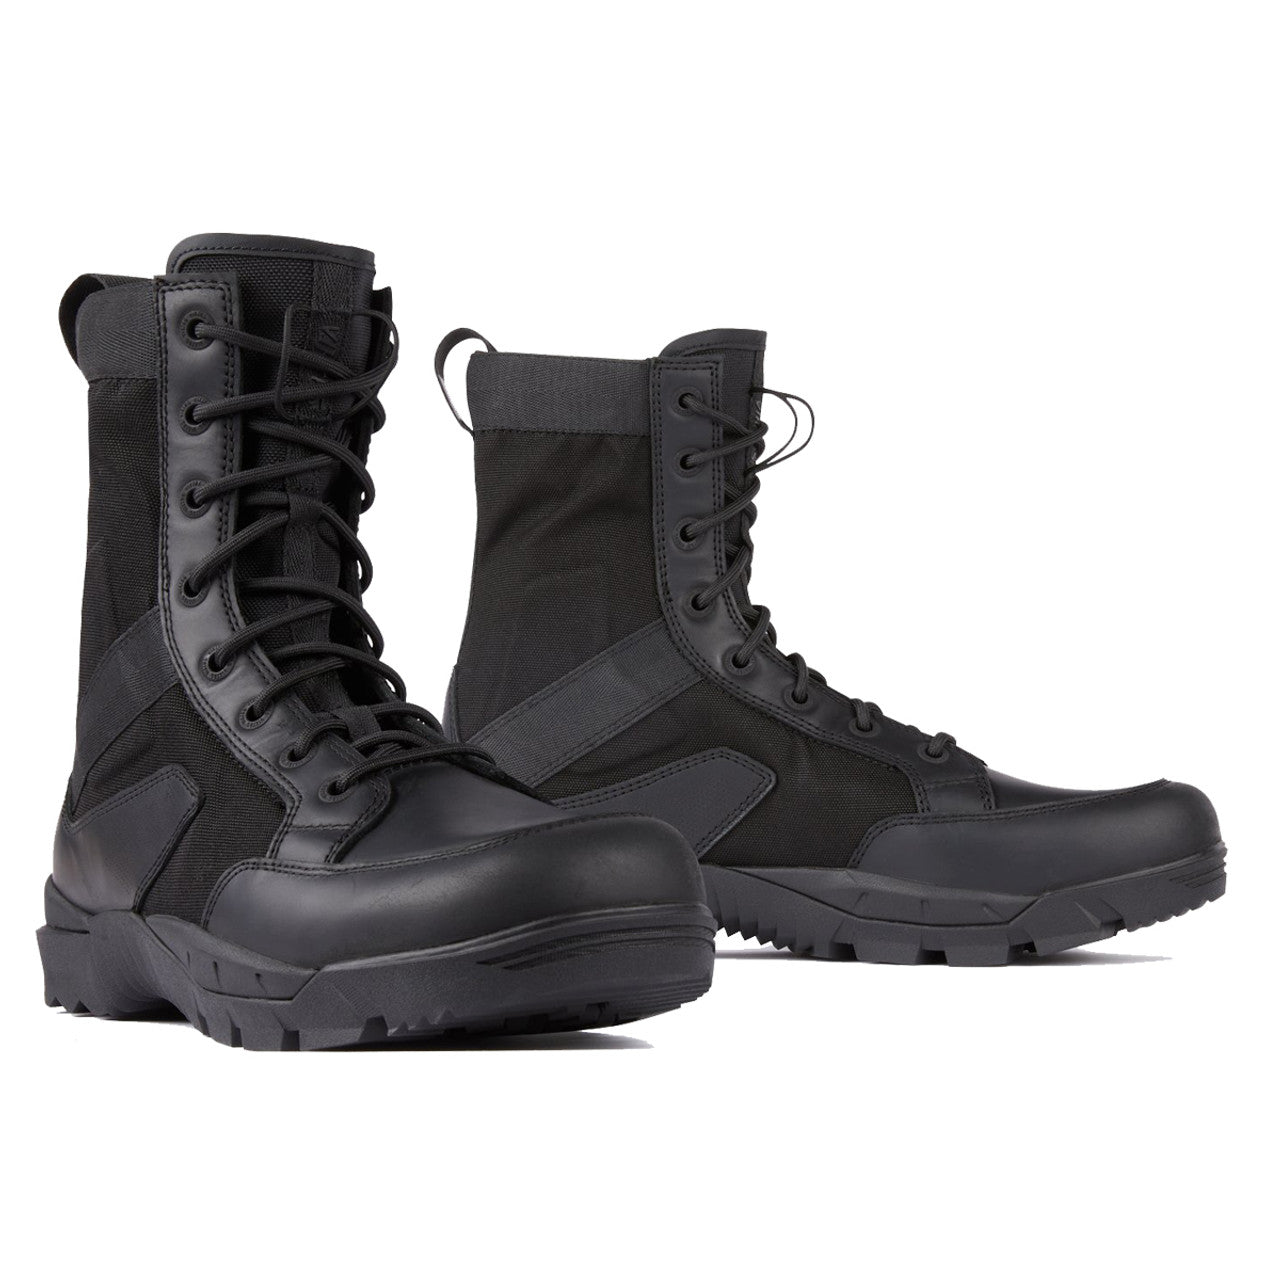 Viktos Johnny Combat SF Boots Nightfjall Tactical Gear Australia Supplier Distributor Dealer